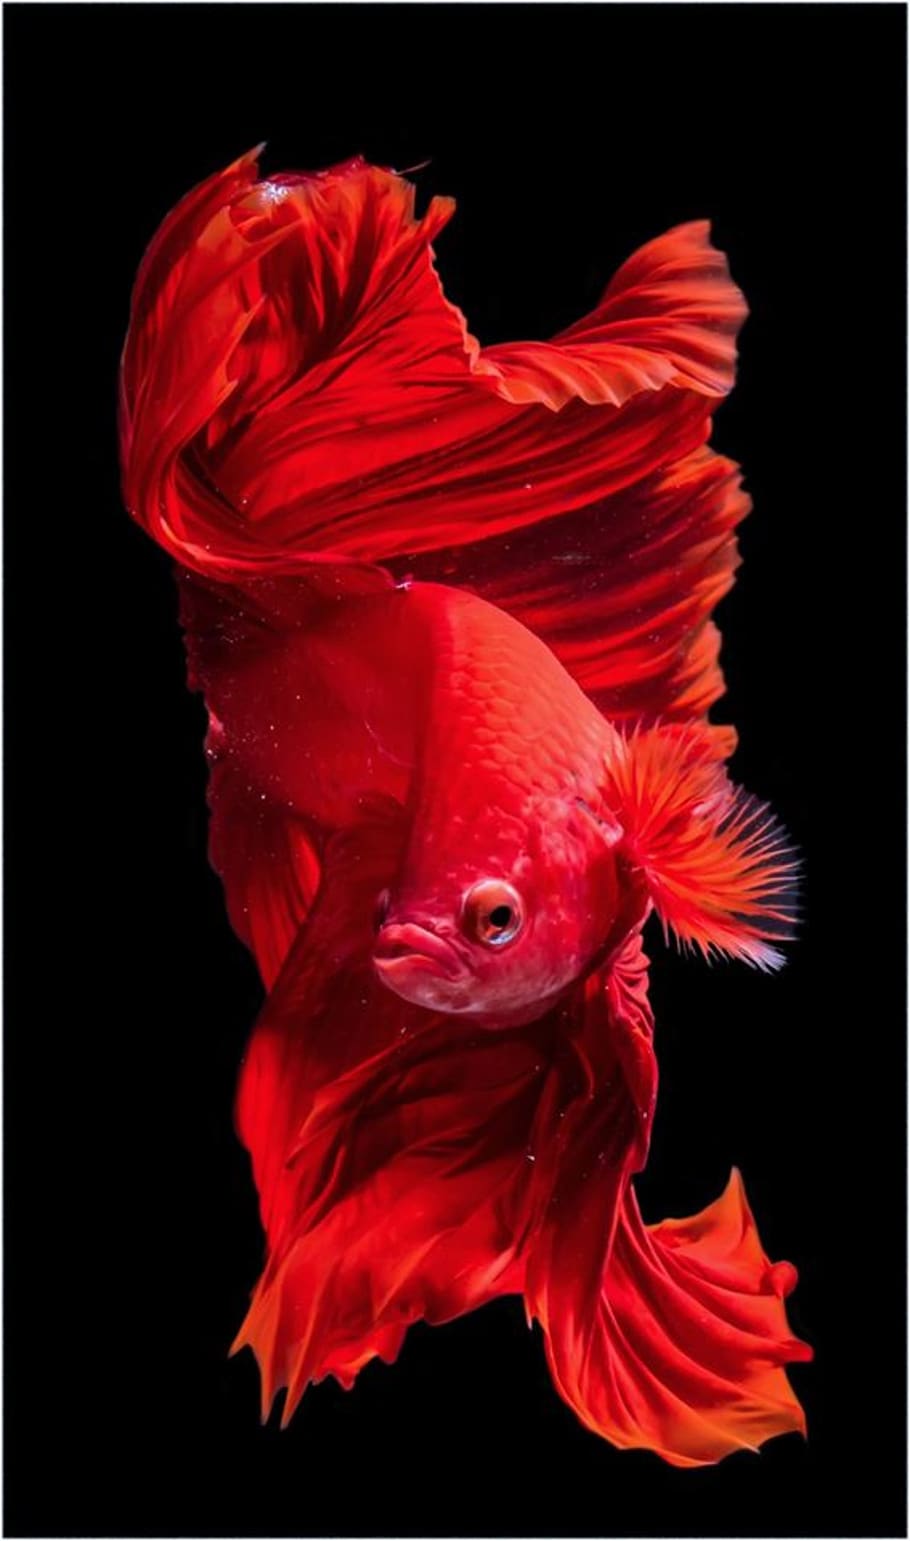 carpa, pez koi, rojo, animal, fondo negro, temas de animales, foto de estudio, primer plano, un animal, en el interior